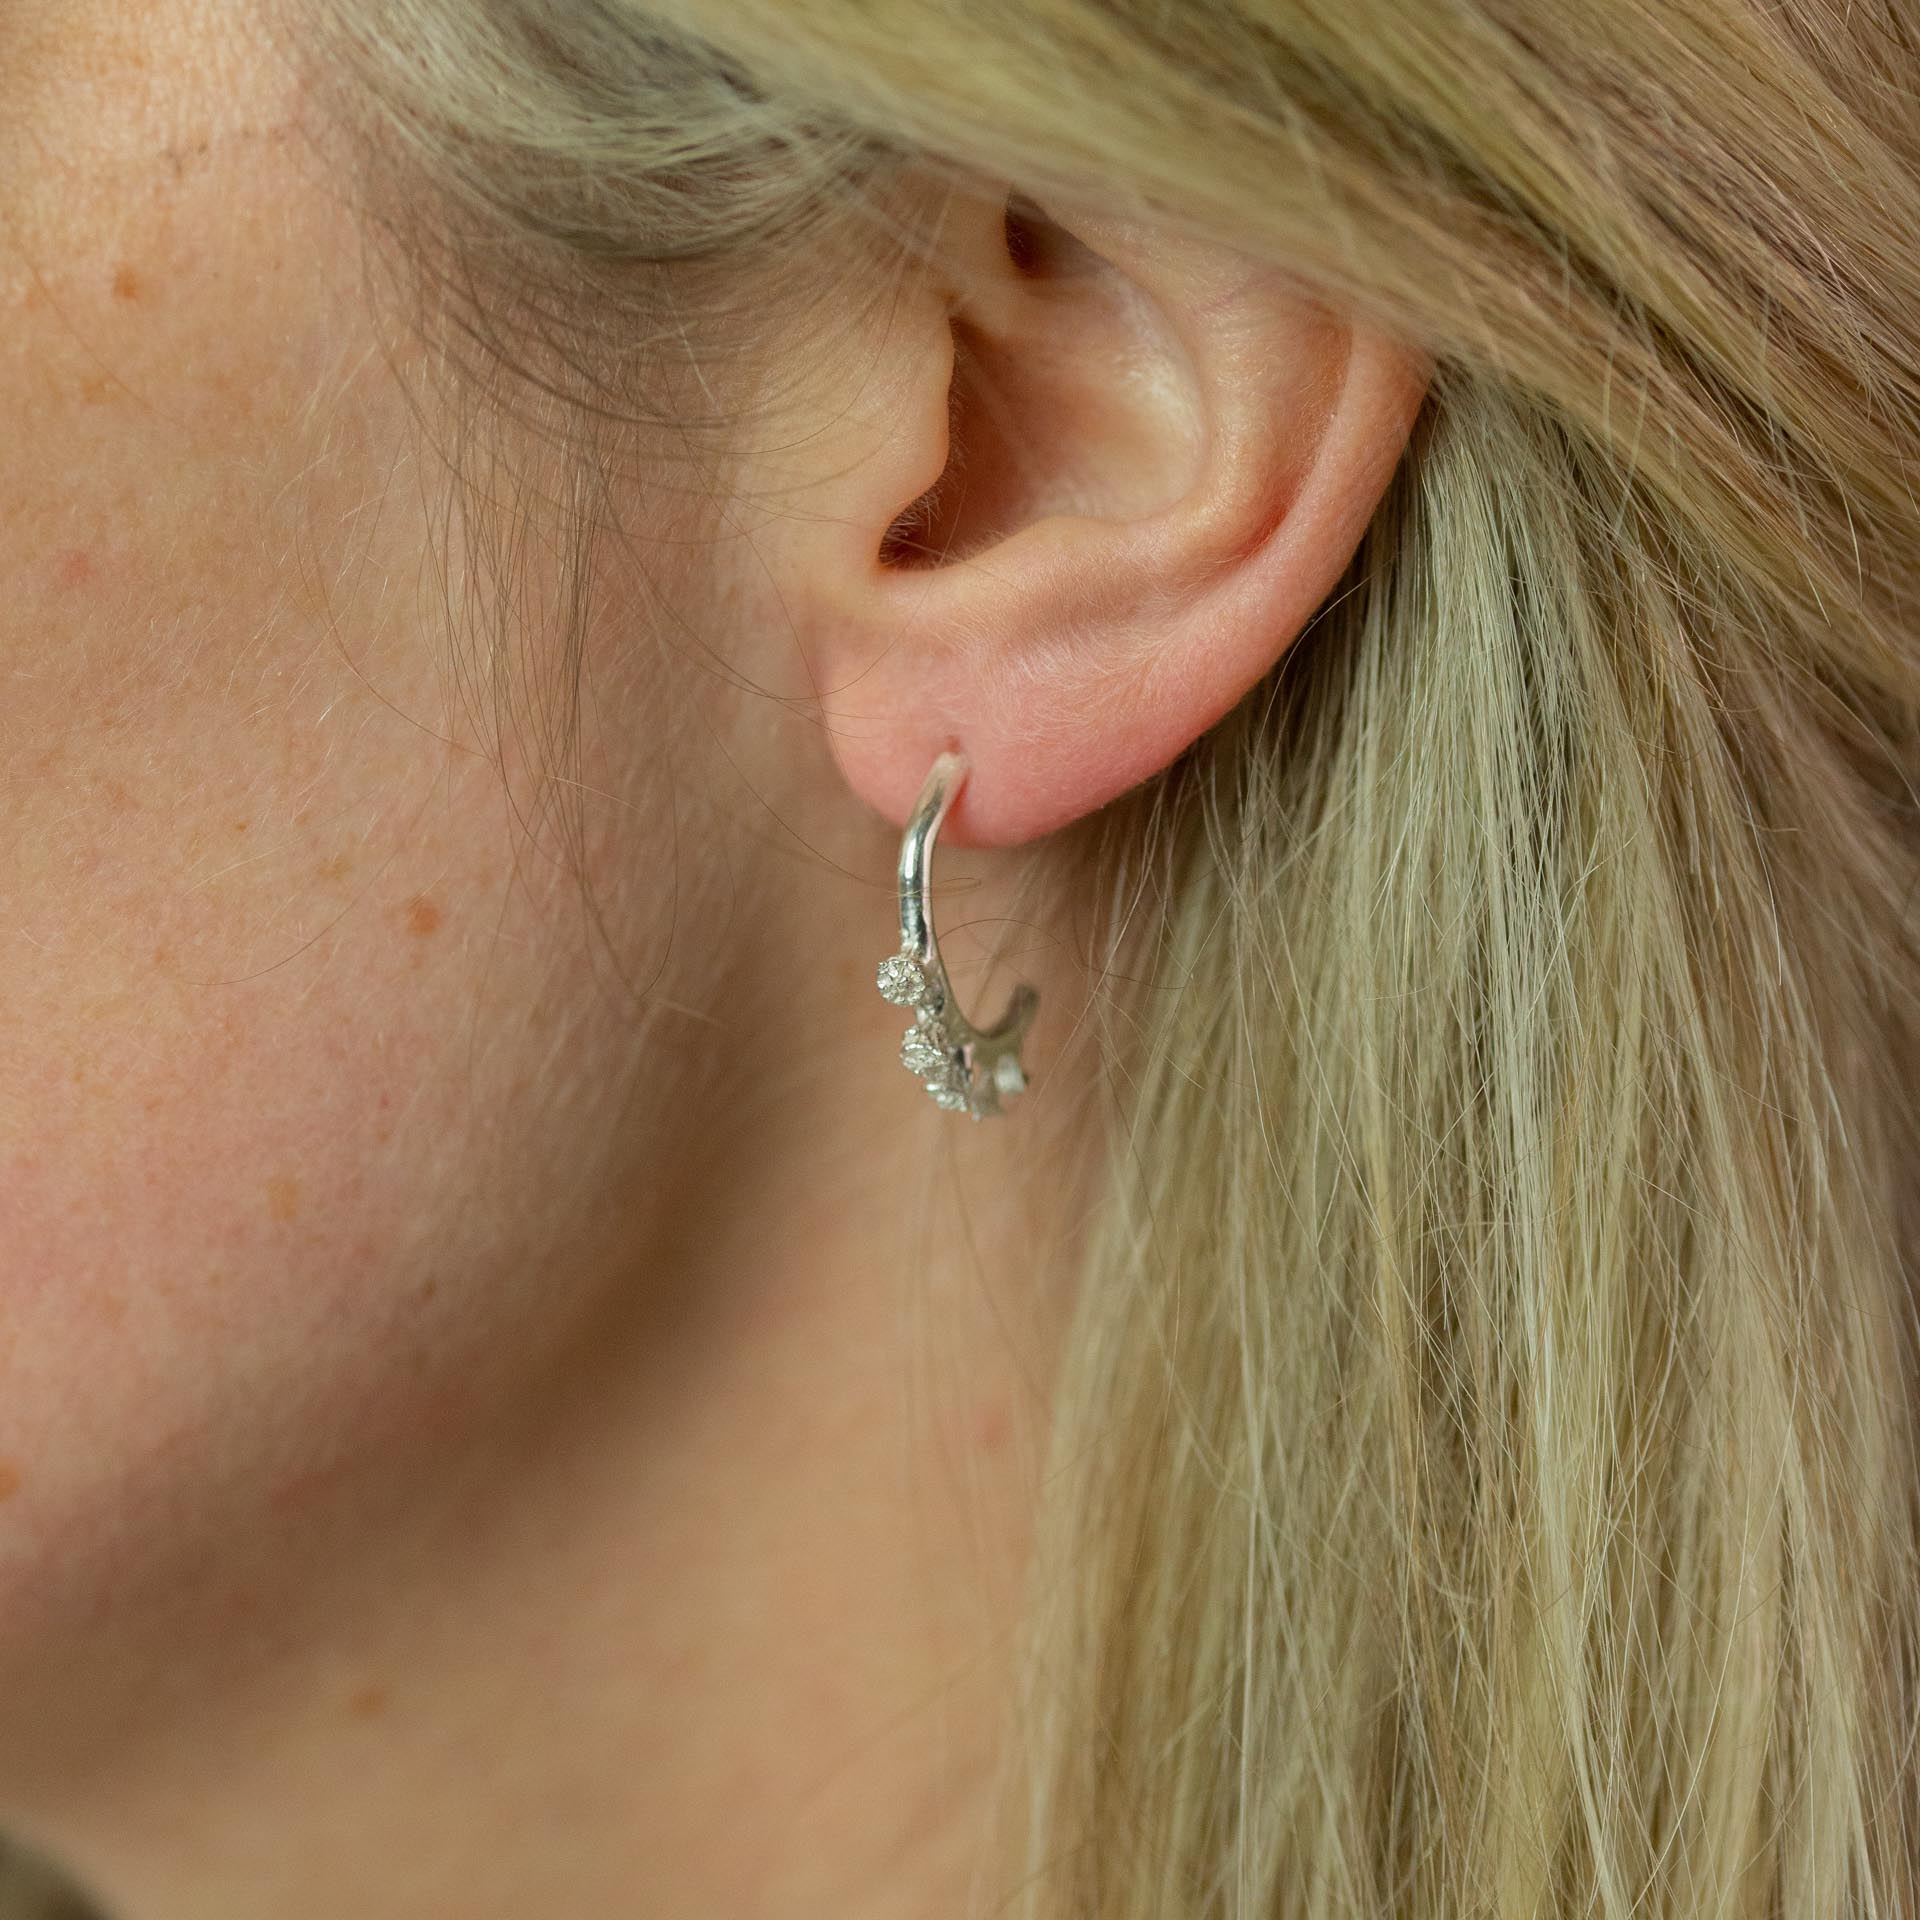 Silver Ivy bud half hoop earrings modelled on ear